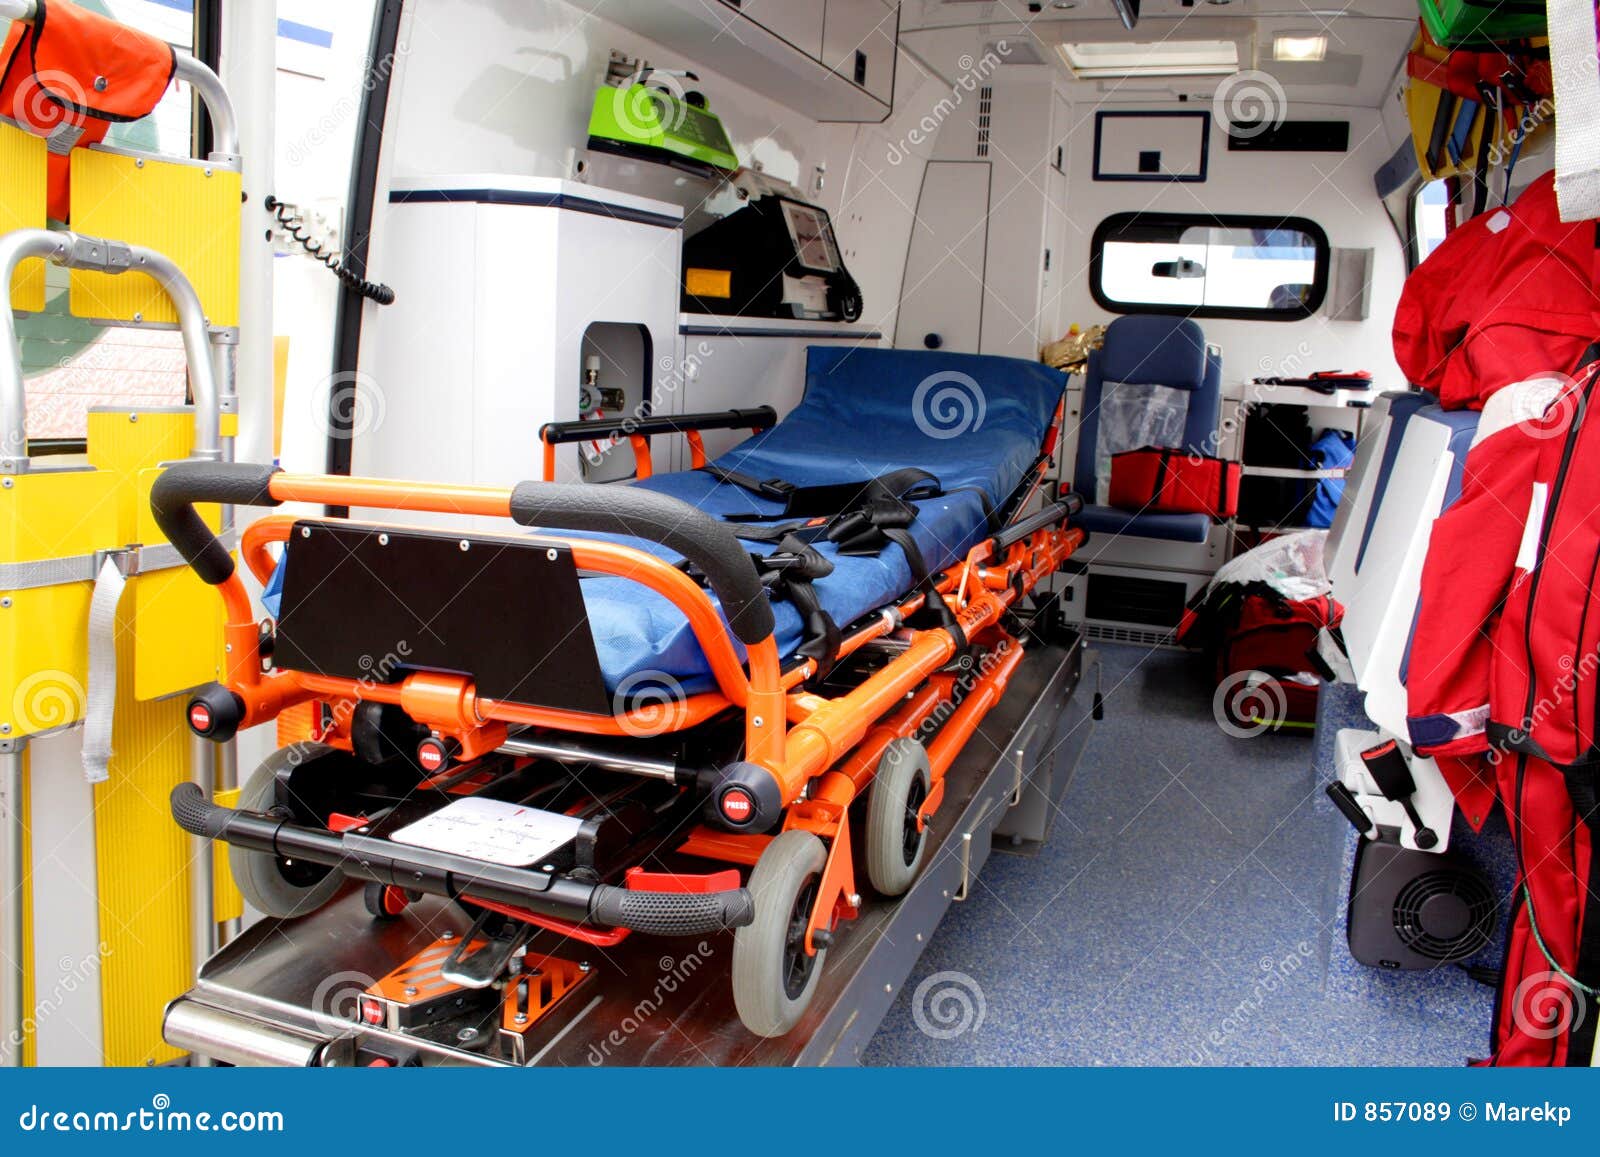 ambulance interior details